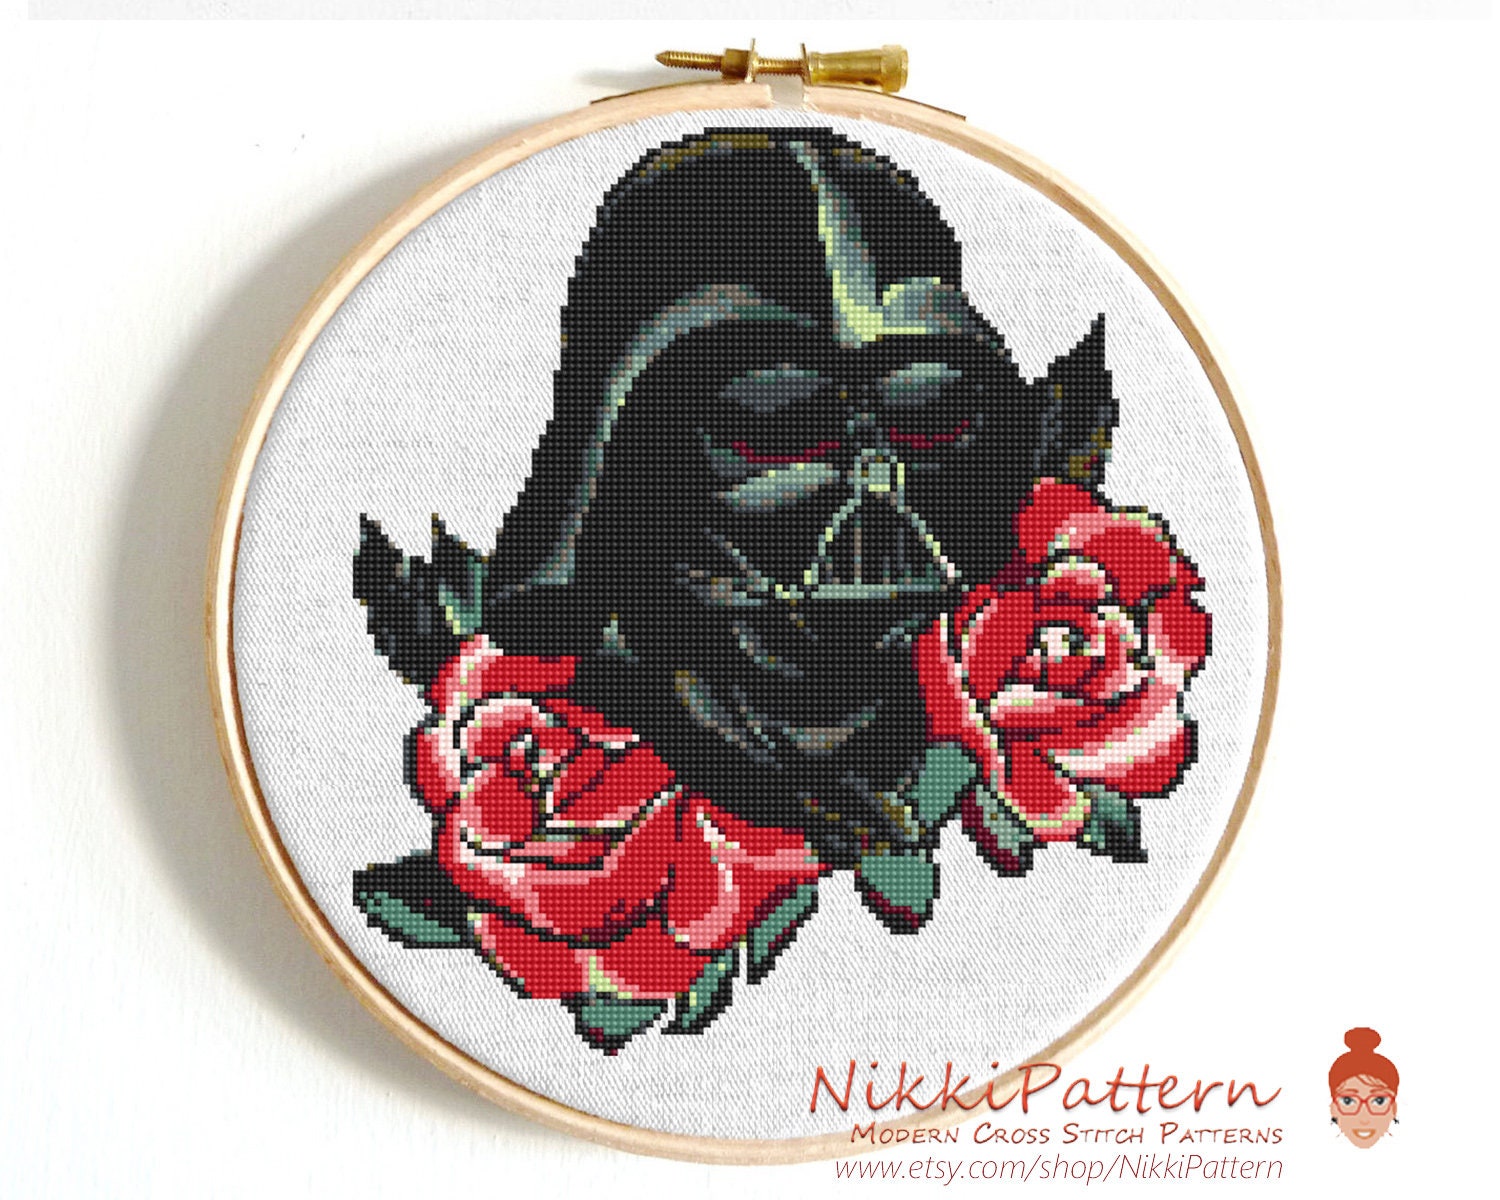 Star Wars Darth Vader Fairy Dust Diamond Painting Embroidery Cross Stitch  Mosaic Rhinestones Handicrafts Craft Home Decor Gift - AliExpress